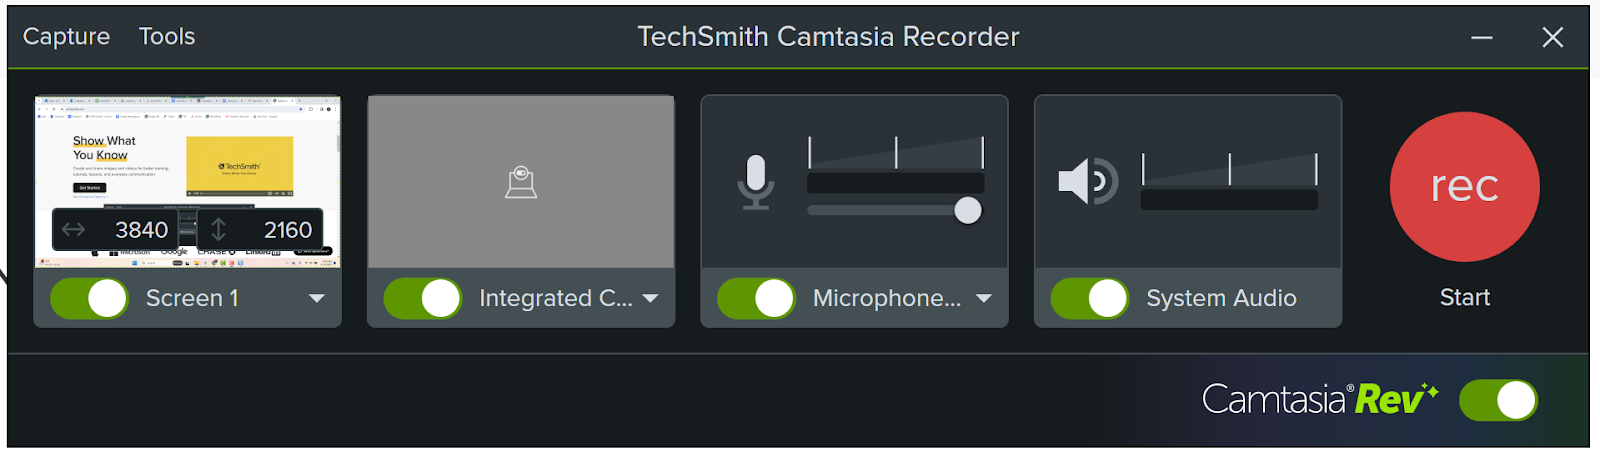 TechSmith's Camtasia screen recorder menu with options.